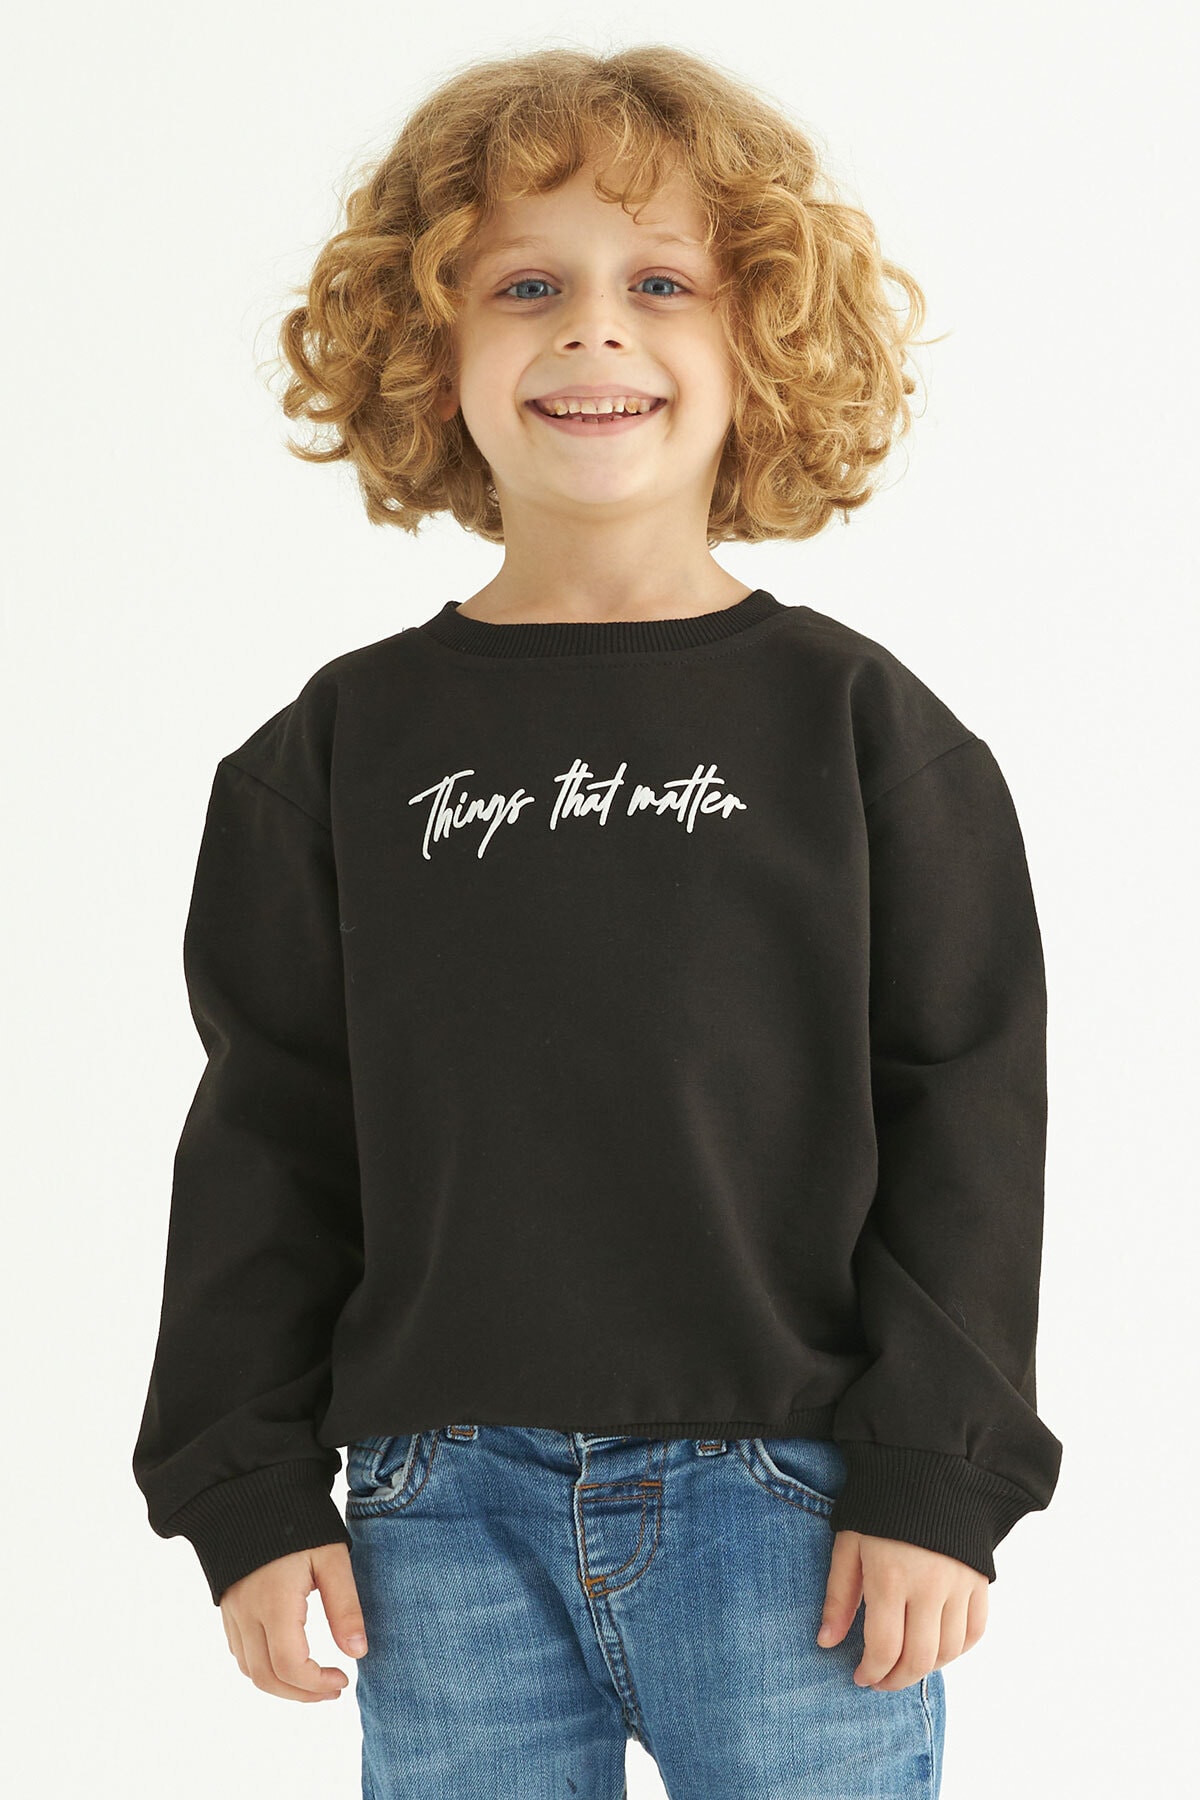 zepkids Boys' Black and Text Printed Crewneck Sweatshirt.